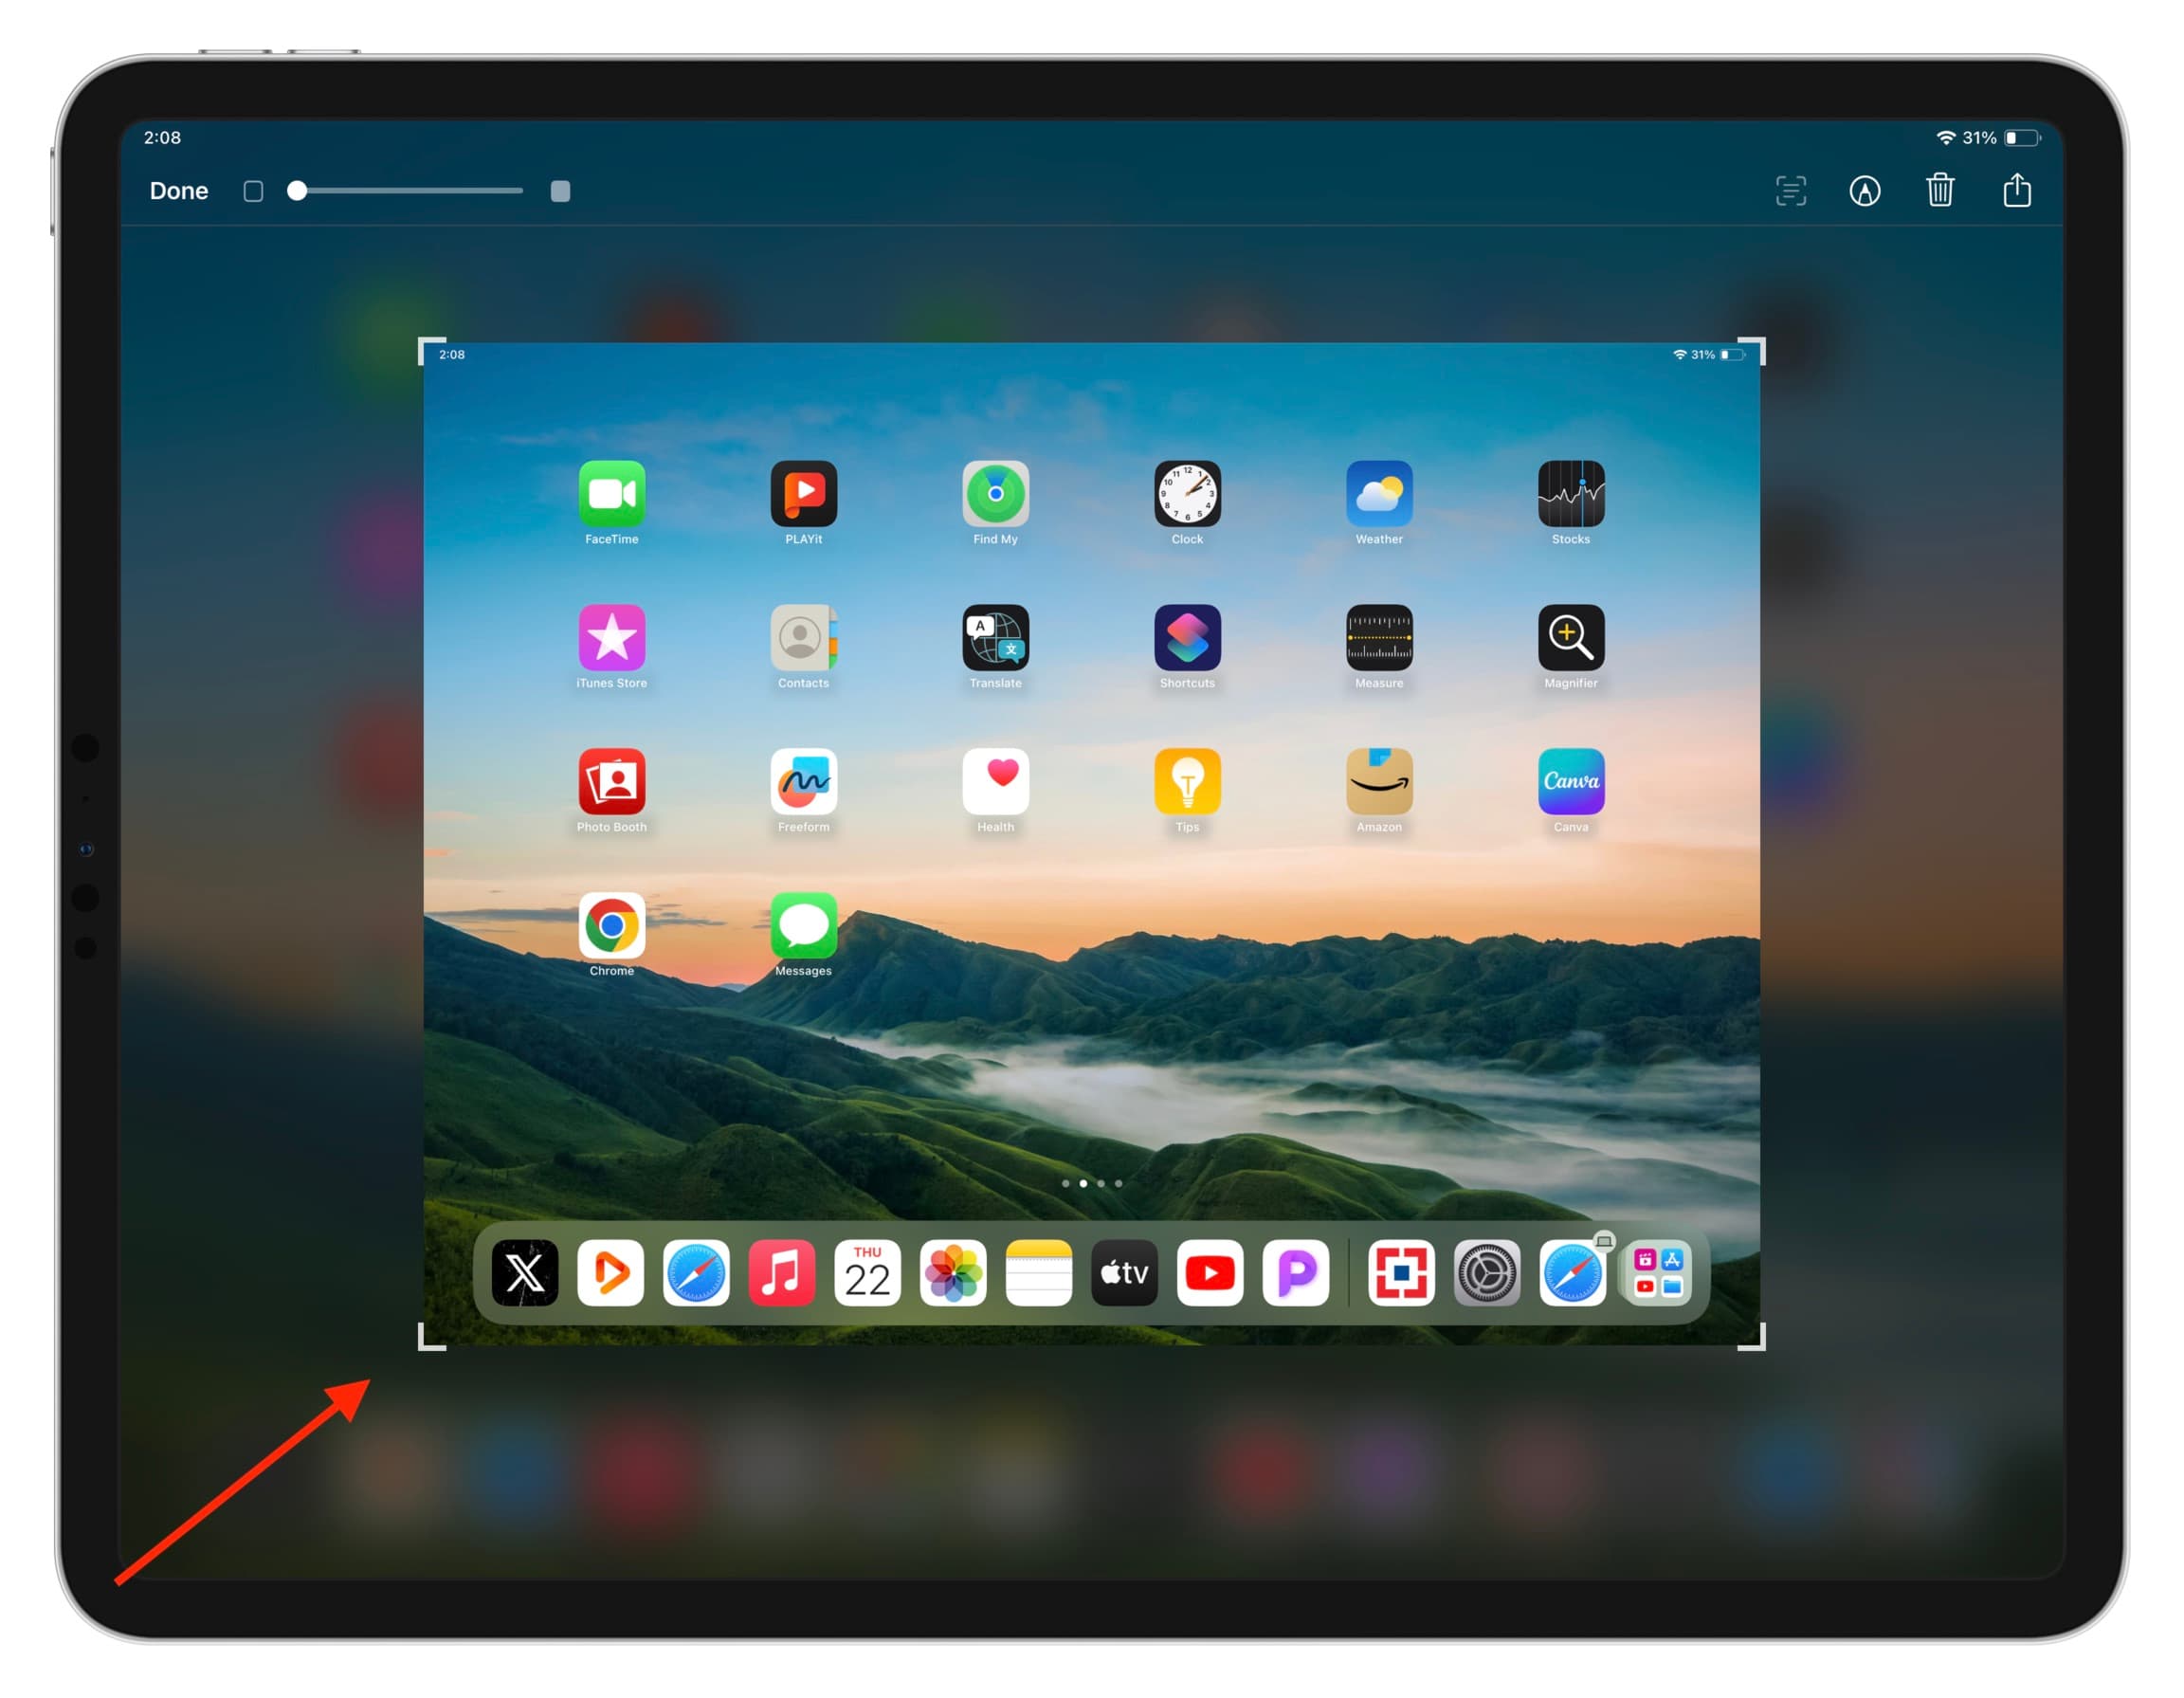 Swipe outward from bottom left corner of iPad screen to take screenshot